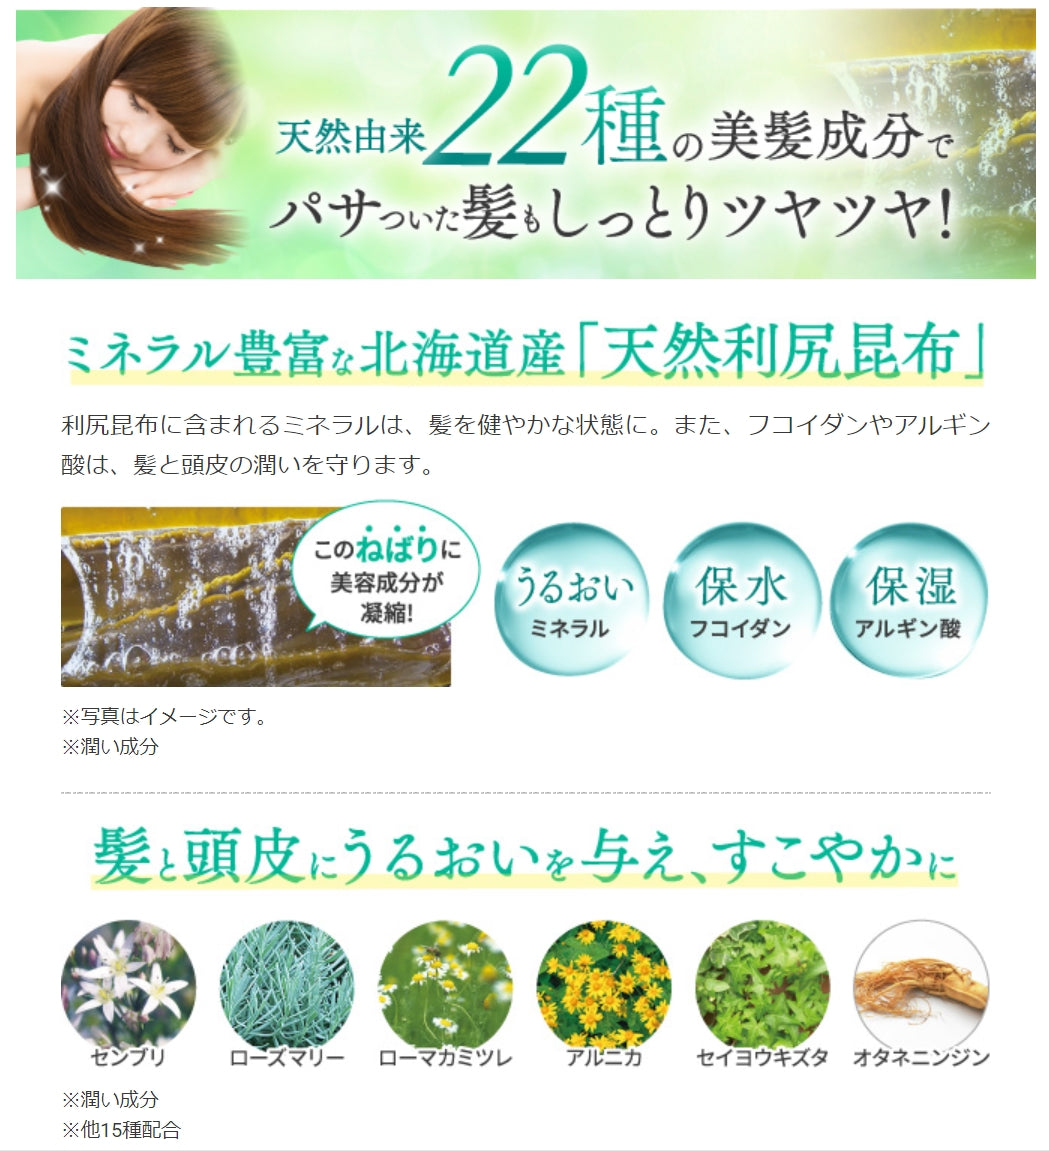 [6-PACK] Rishiri Kombu White Hair Hair Dye Stick 20g Dark Brown